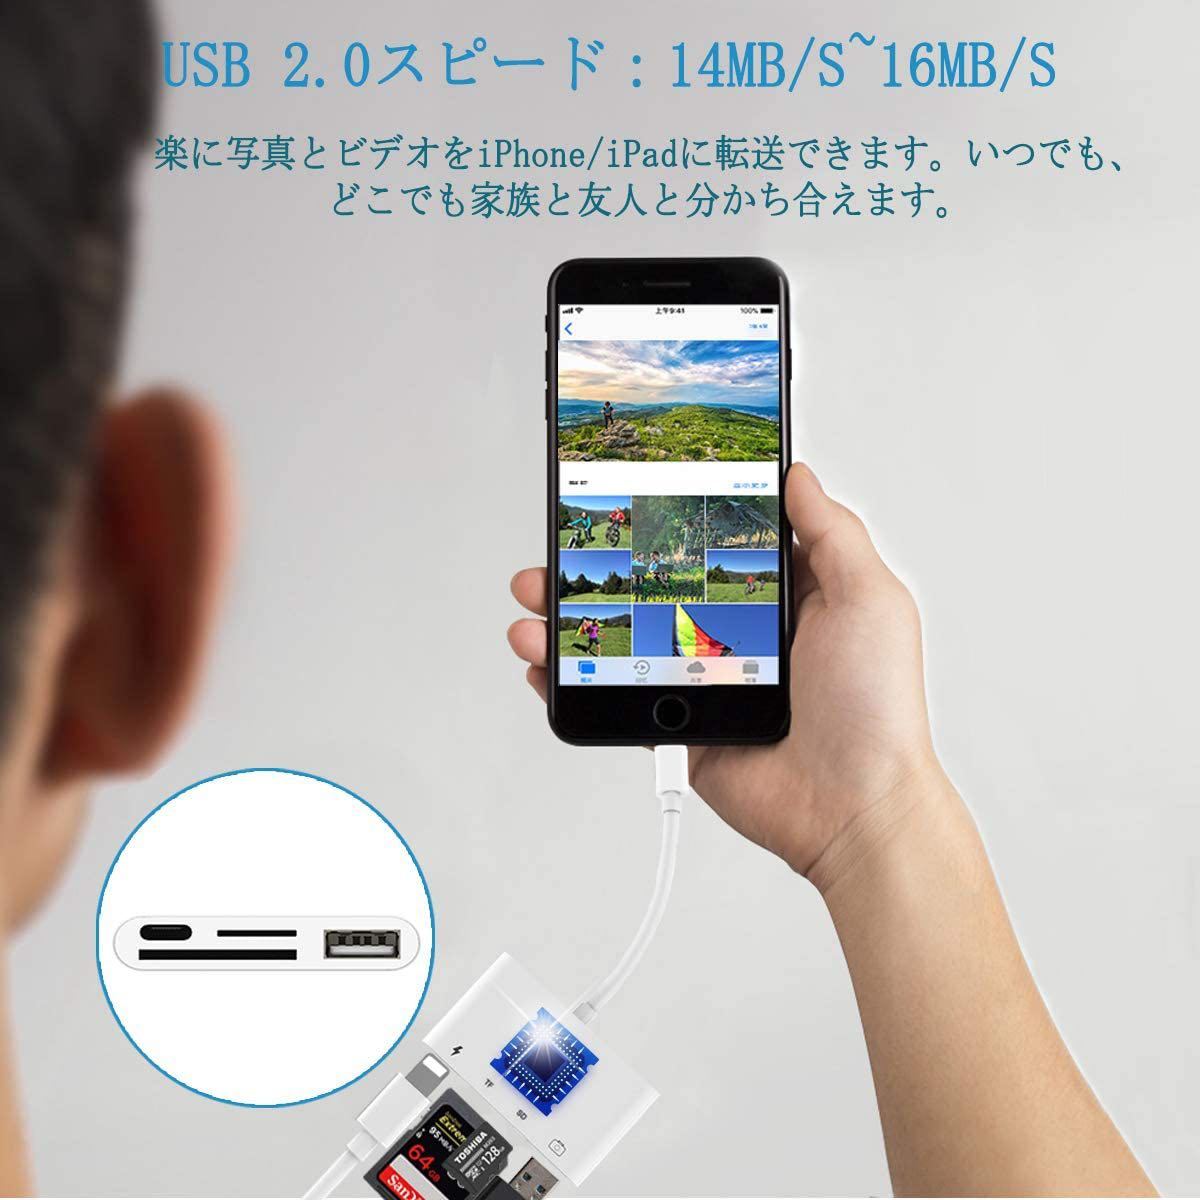 iPhone SD カードリーダー 最新 iOS14 双方向 データ転送 充電